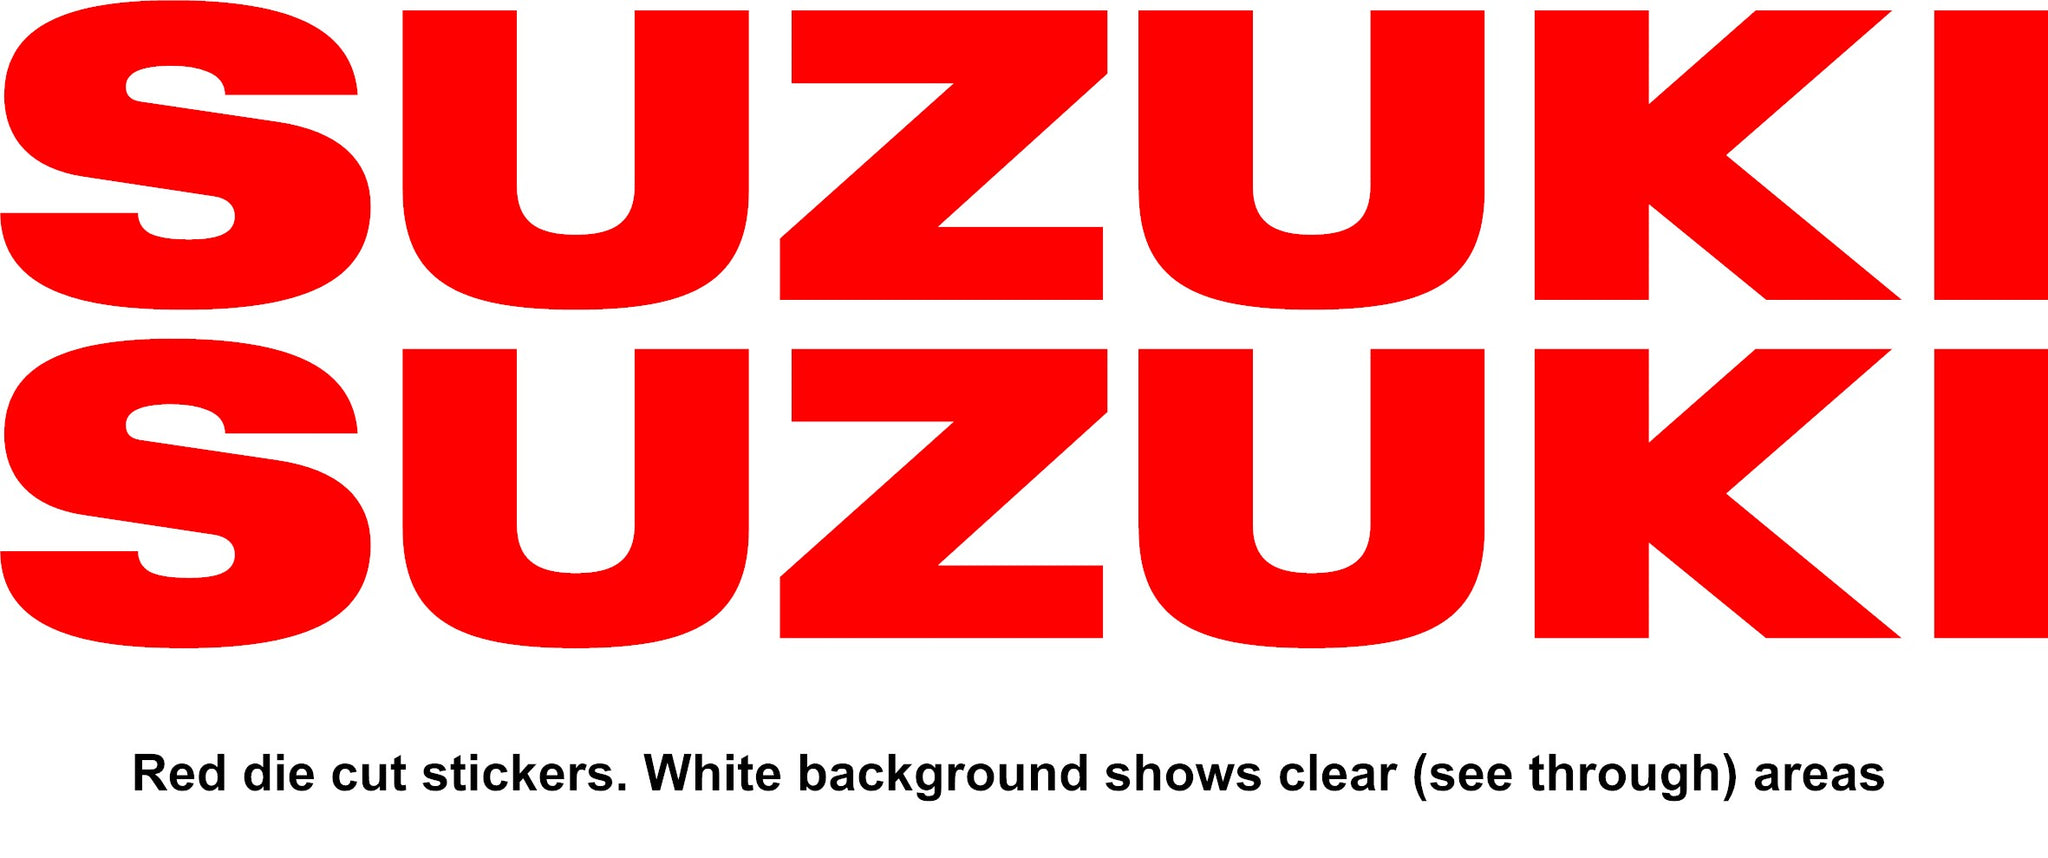 SUZUKI Replica Name Vinyl Sticker Decal Sizes 100mm to 500mm Set